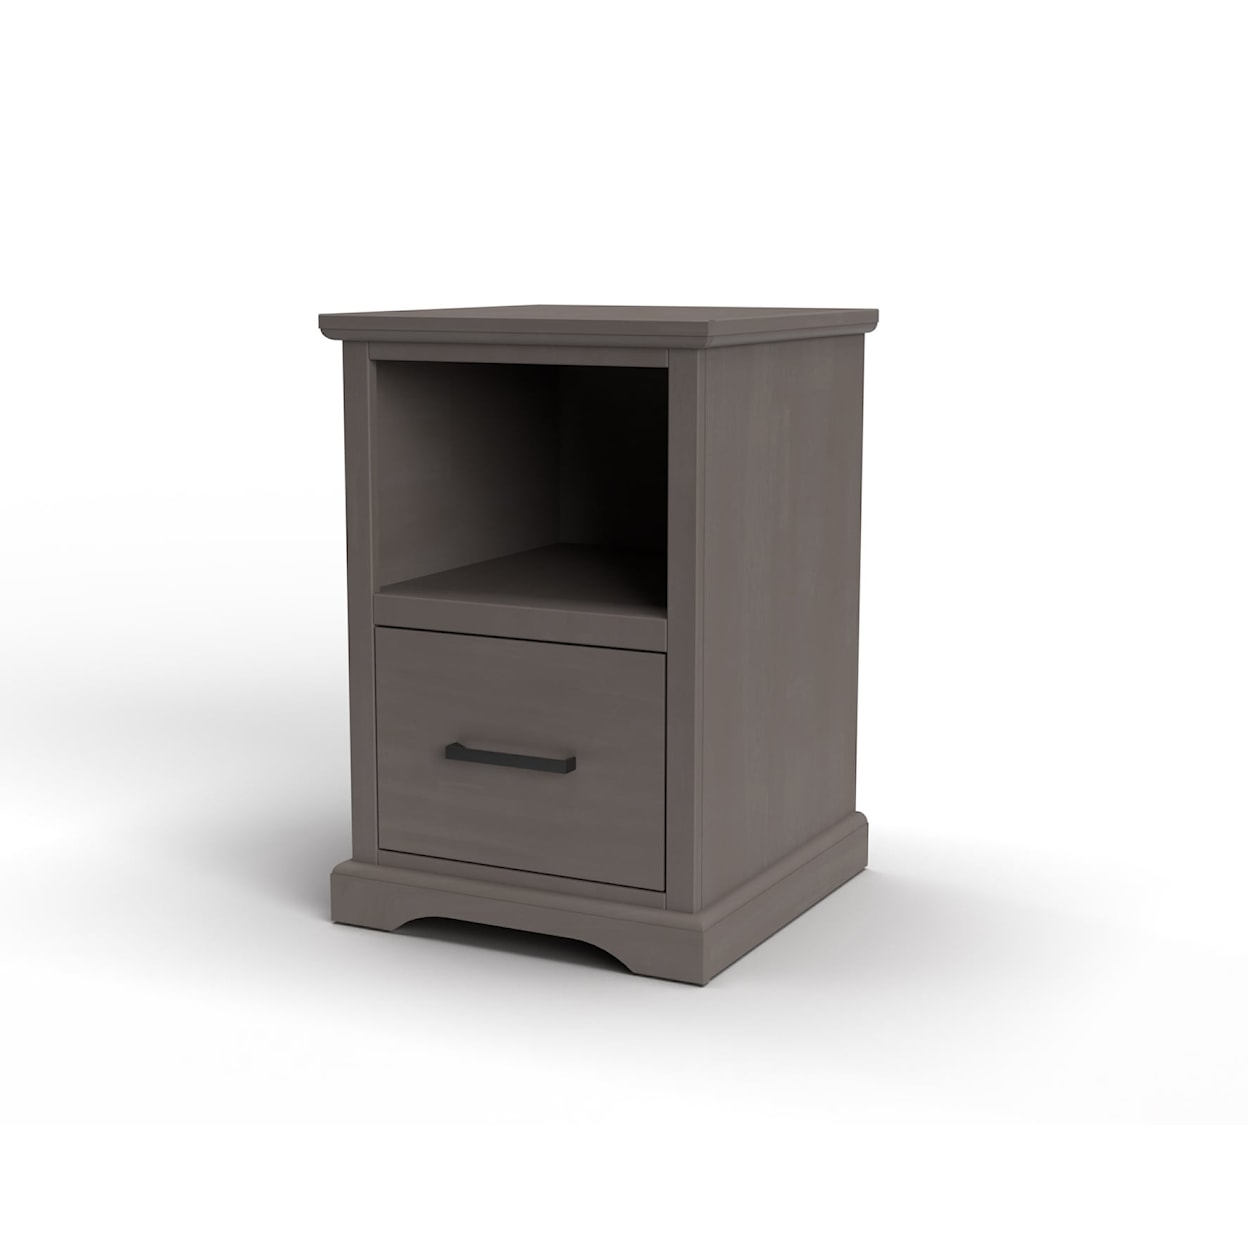 Legends Furniture Cheyenne File Cabinet with Storage